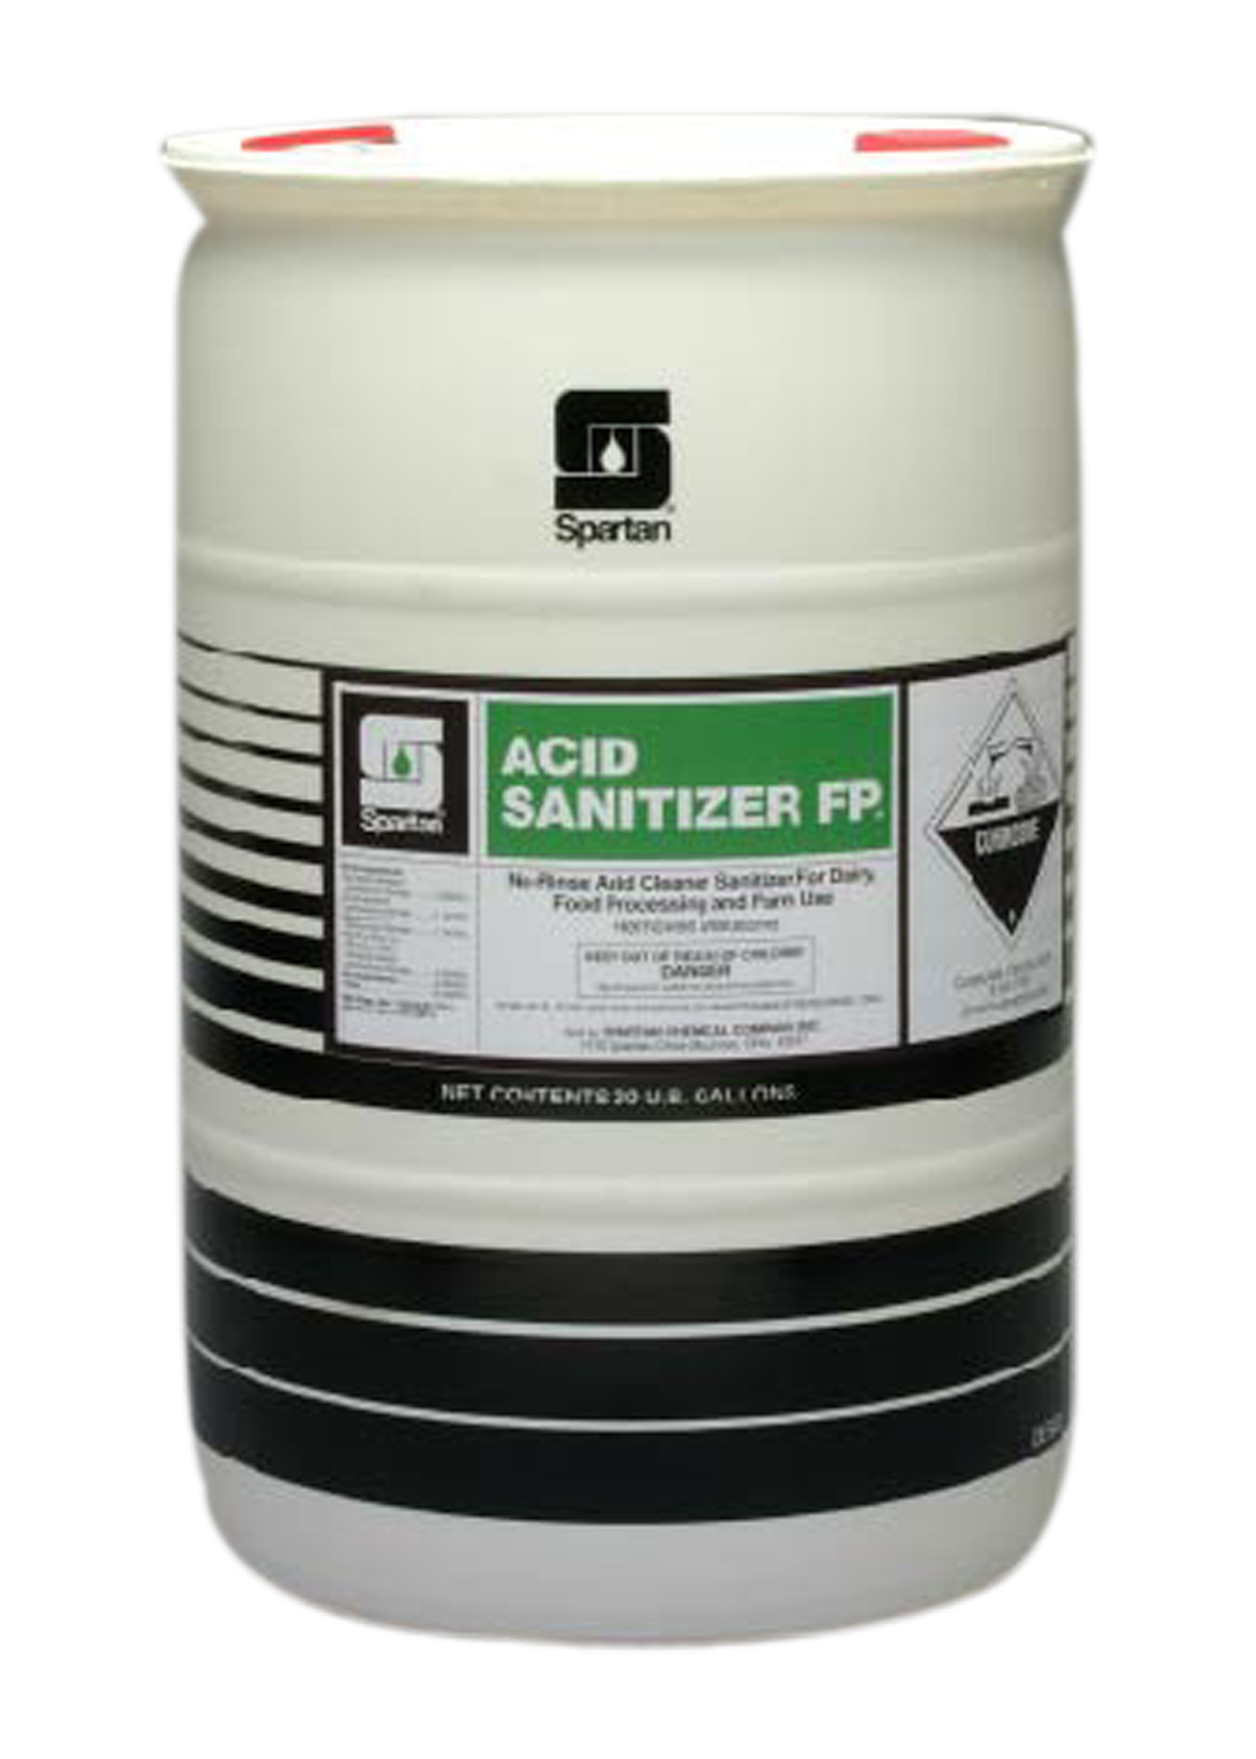 Spartan Chemical Company Acid Sanitizer FP, 30 GAL DRUM